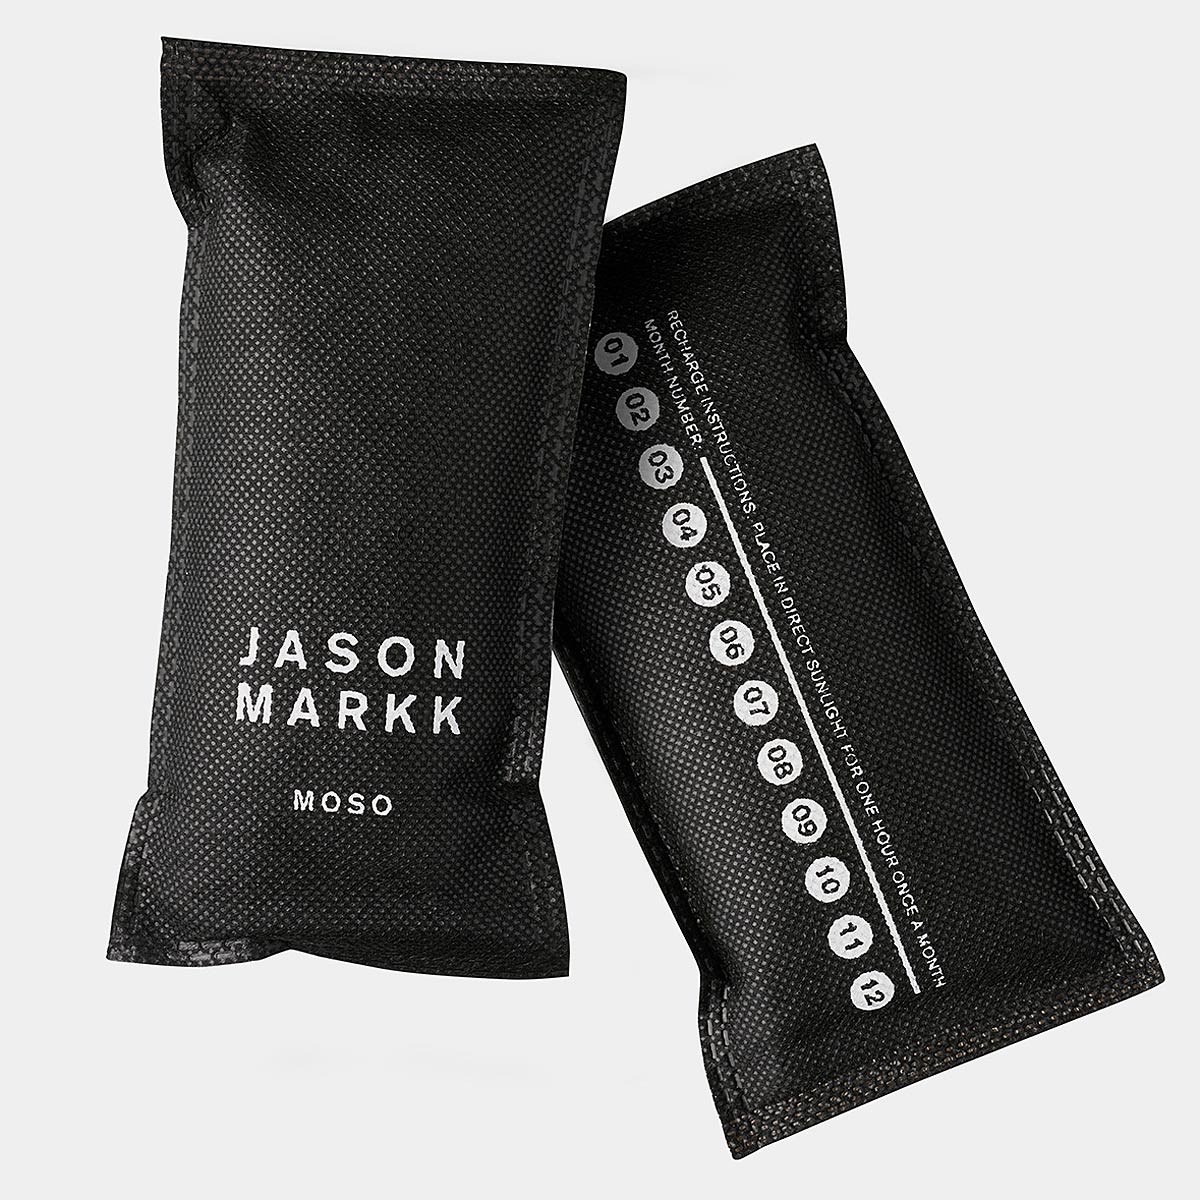 Jason Markk Moso Inserts, N/A